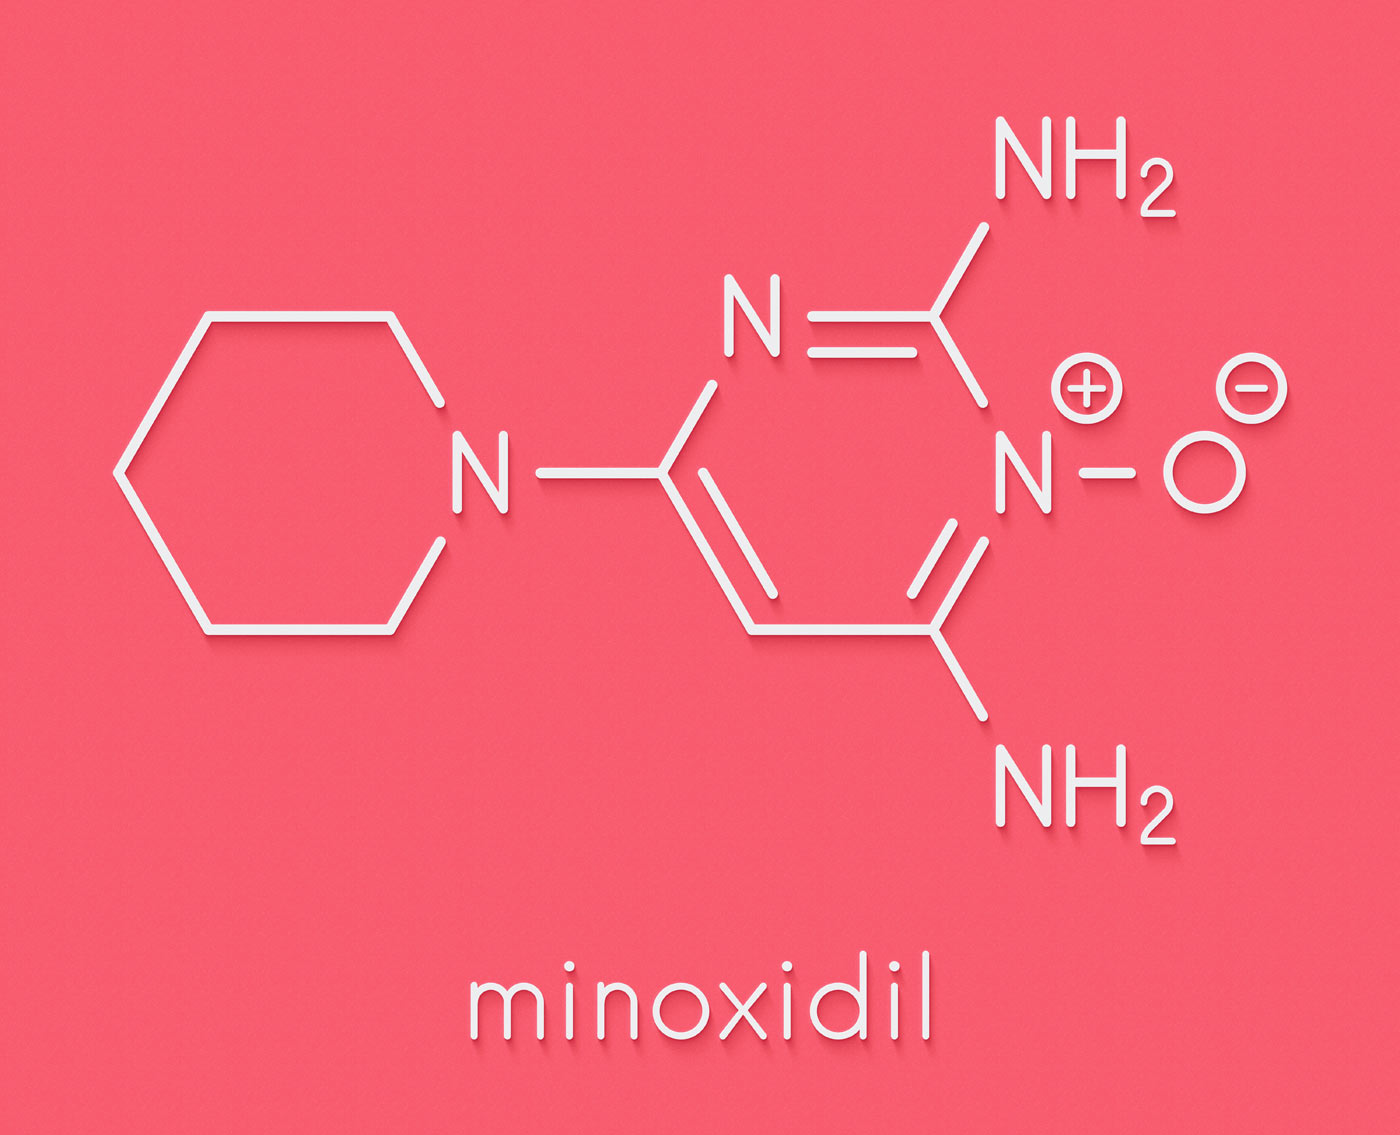 Caduta indotta dal Minoxidil quanto dura